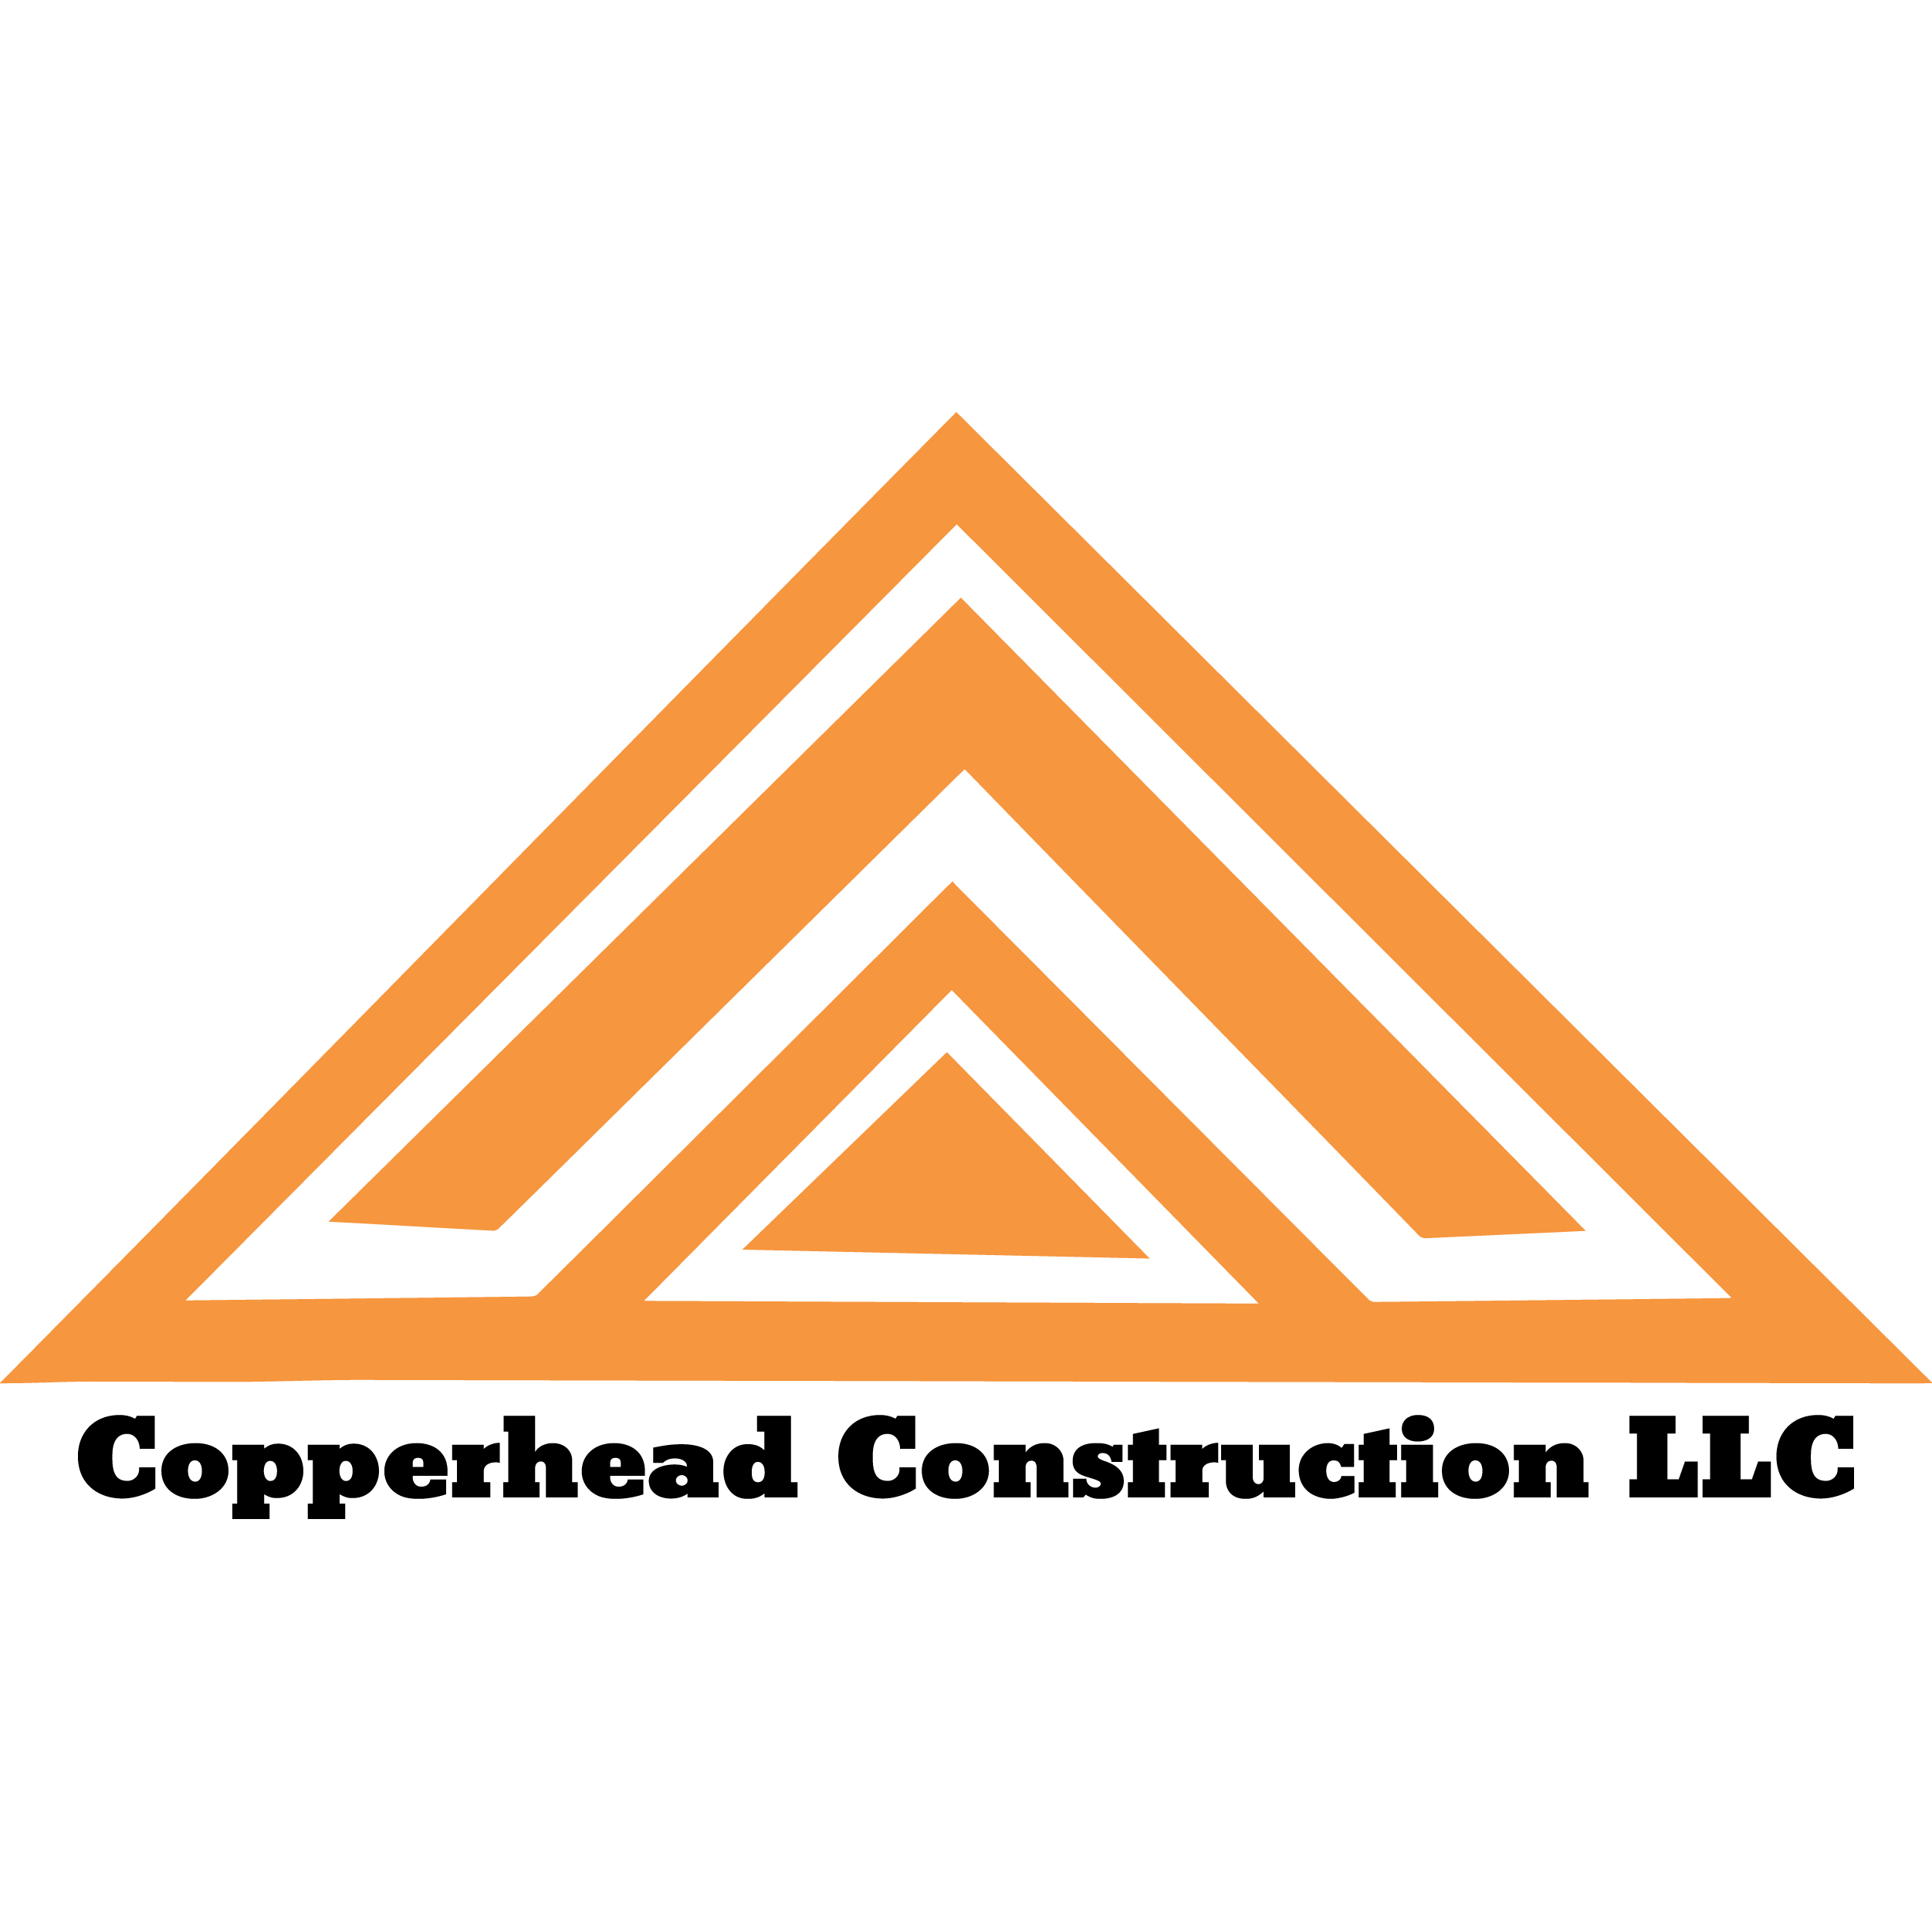 Copperhead Construction LLC